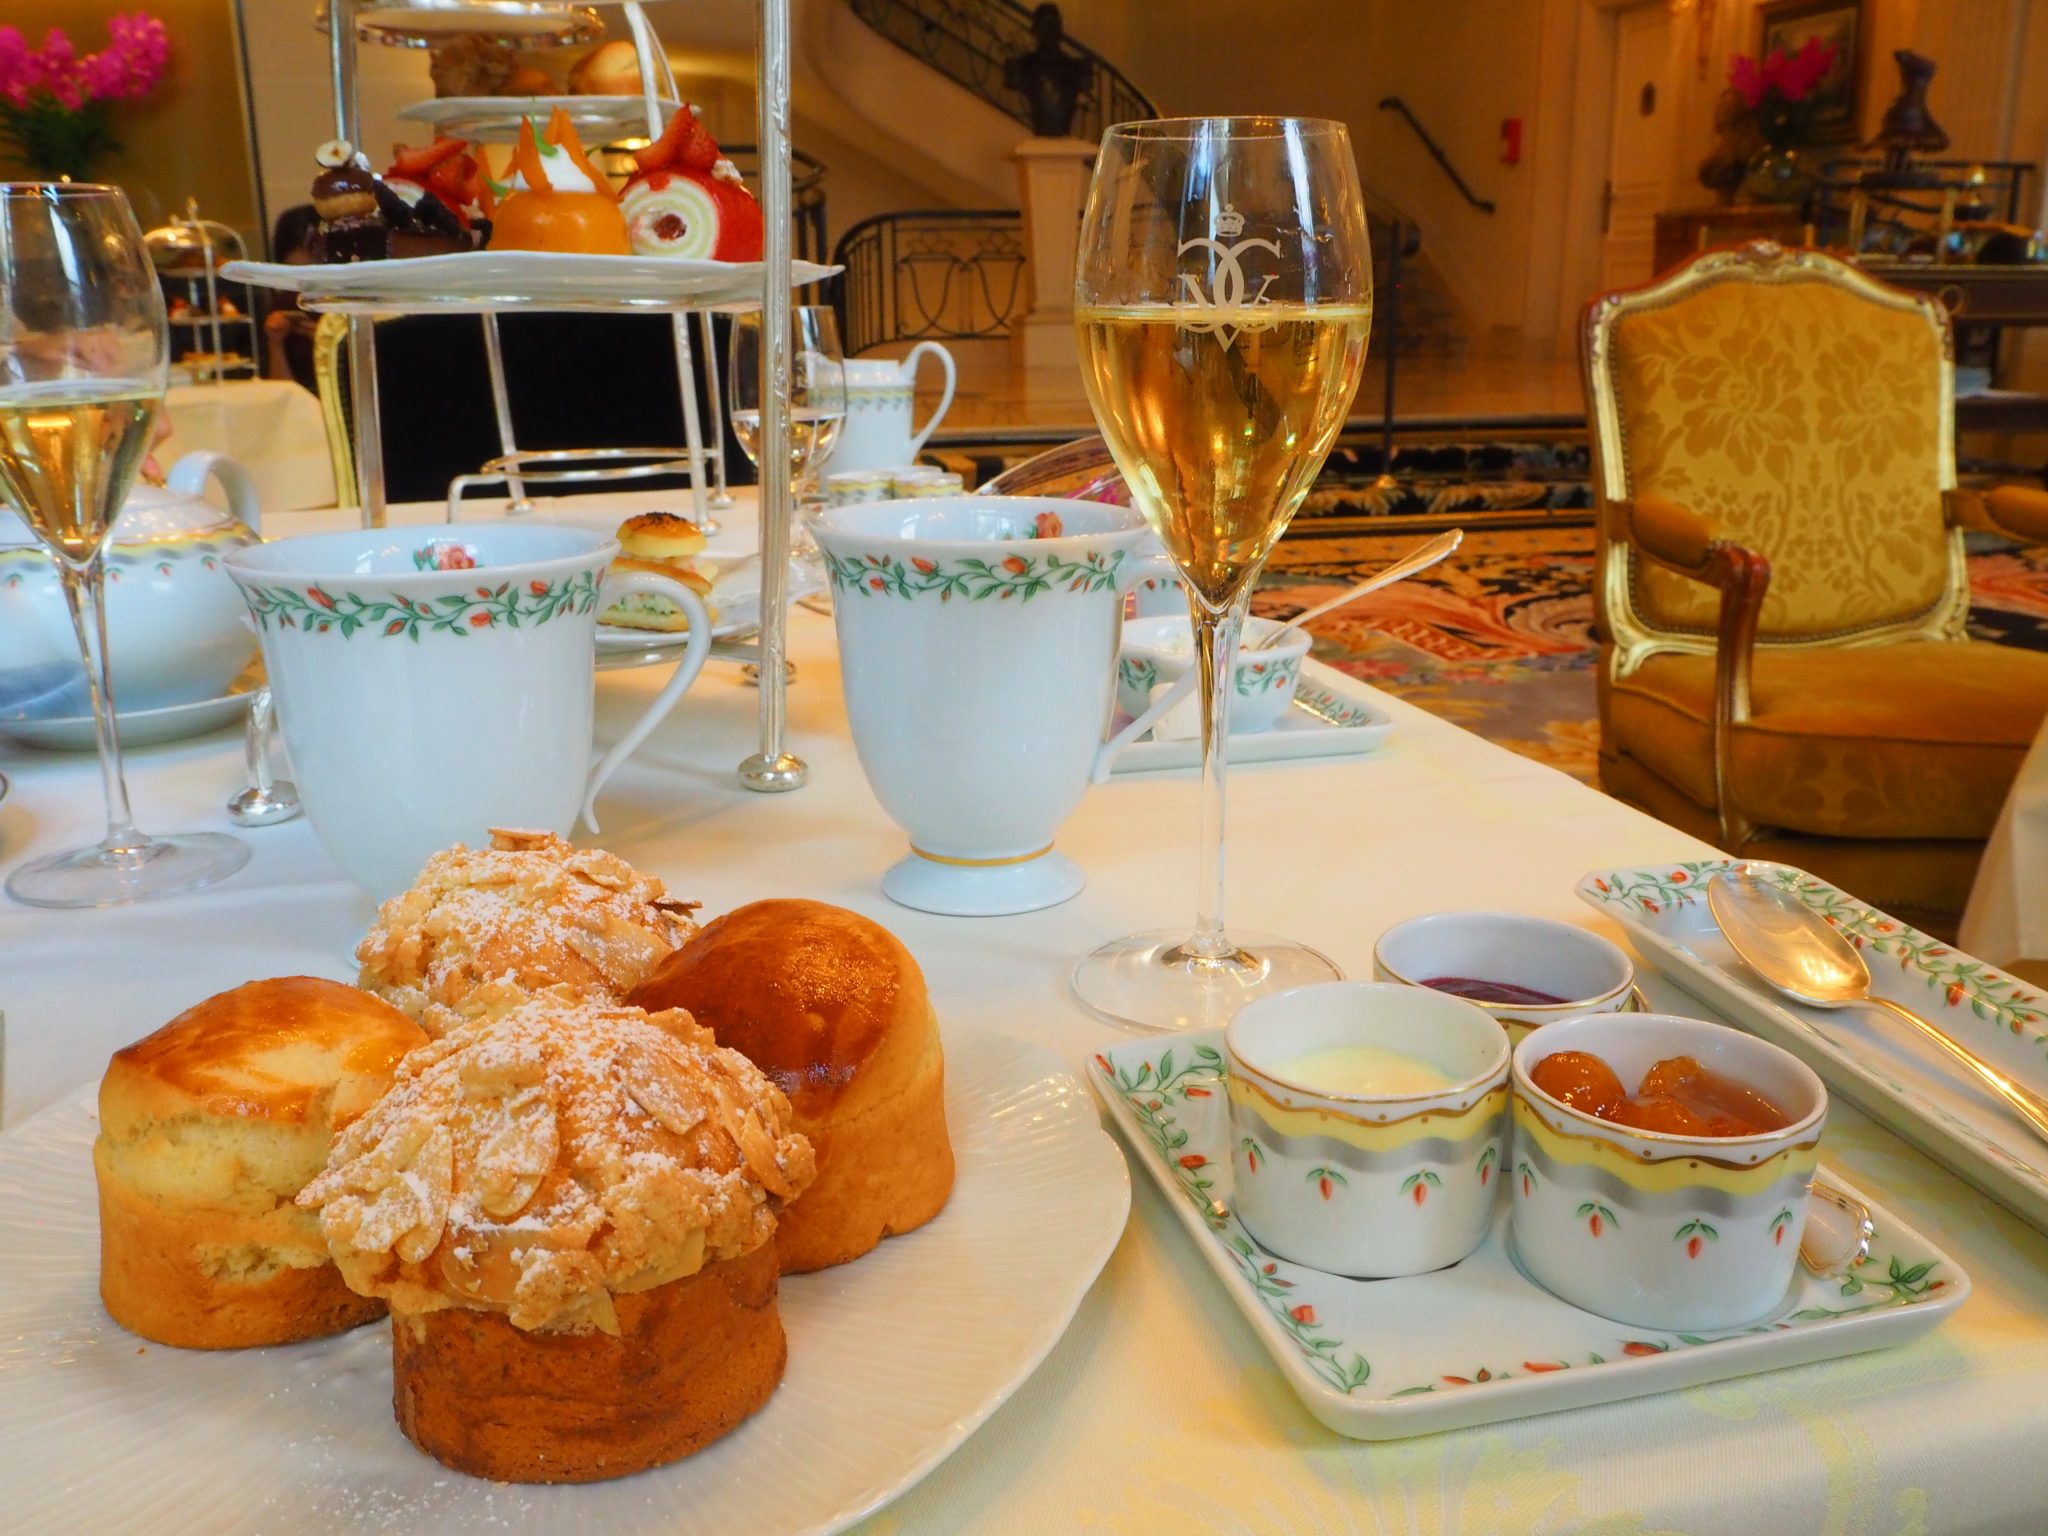 Afternoon Tea Total: Review: Mariage Frères, Paris